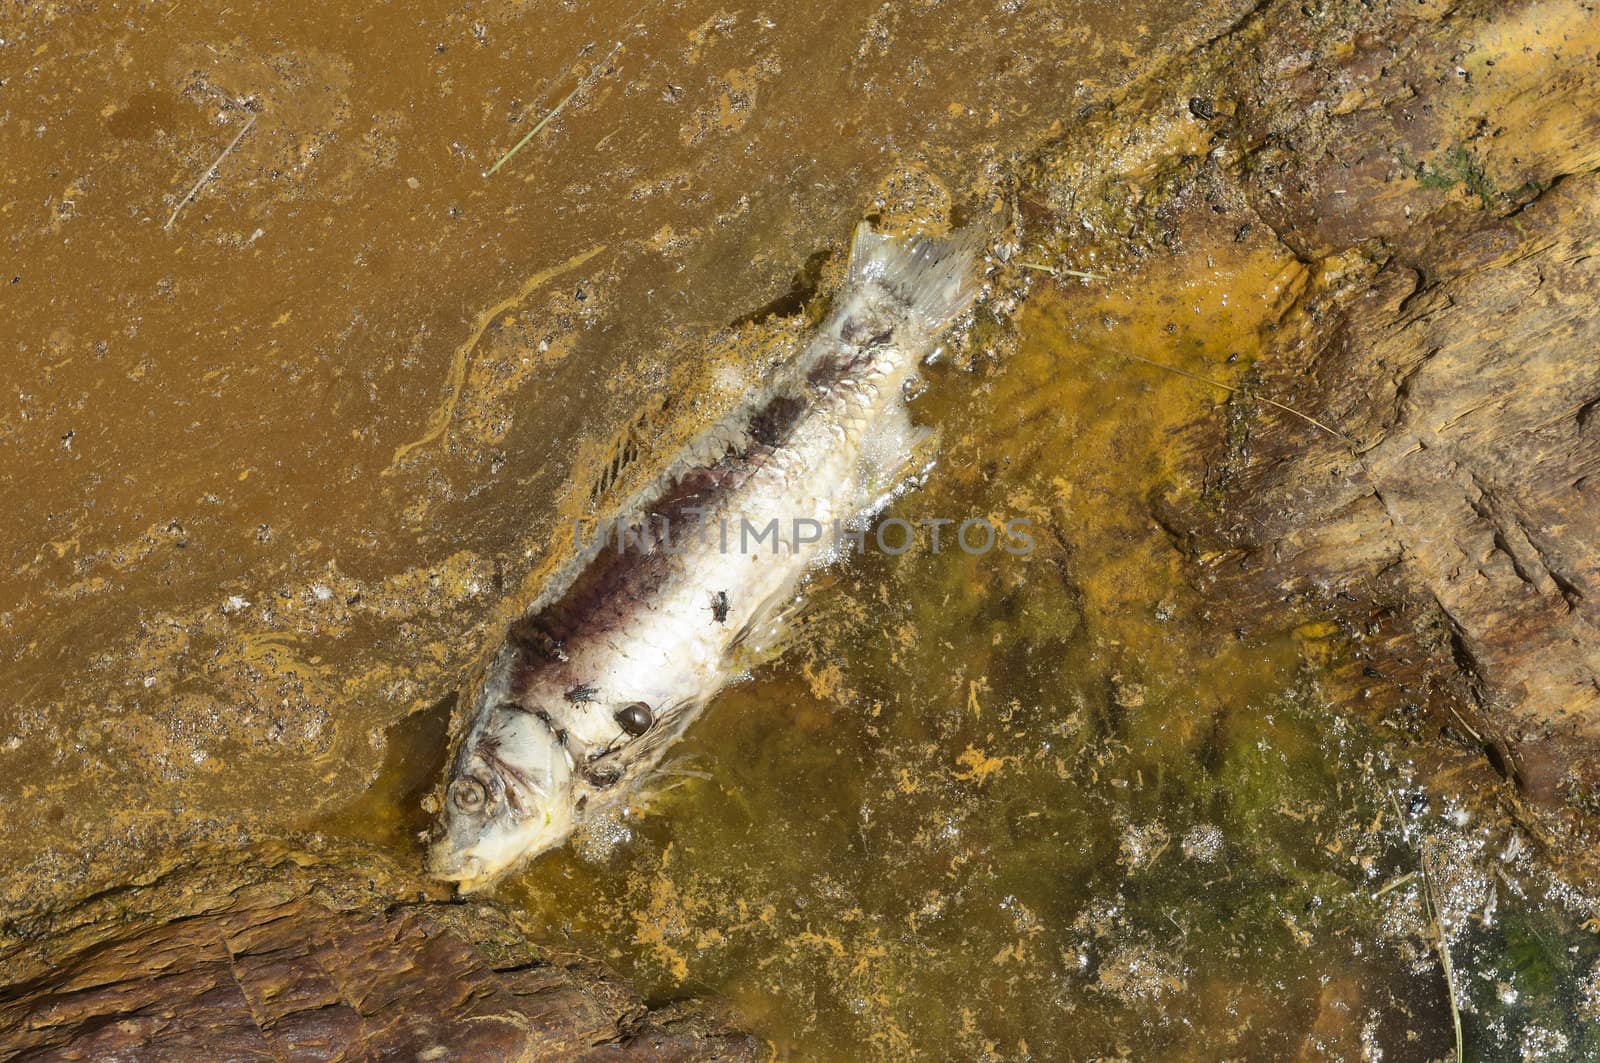 Poisoned fish by mrfotos